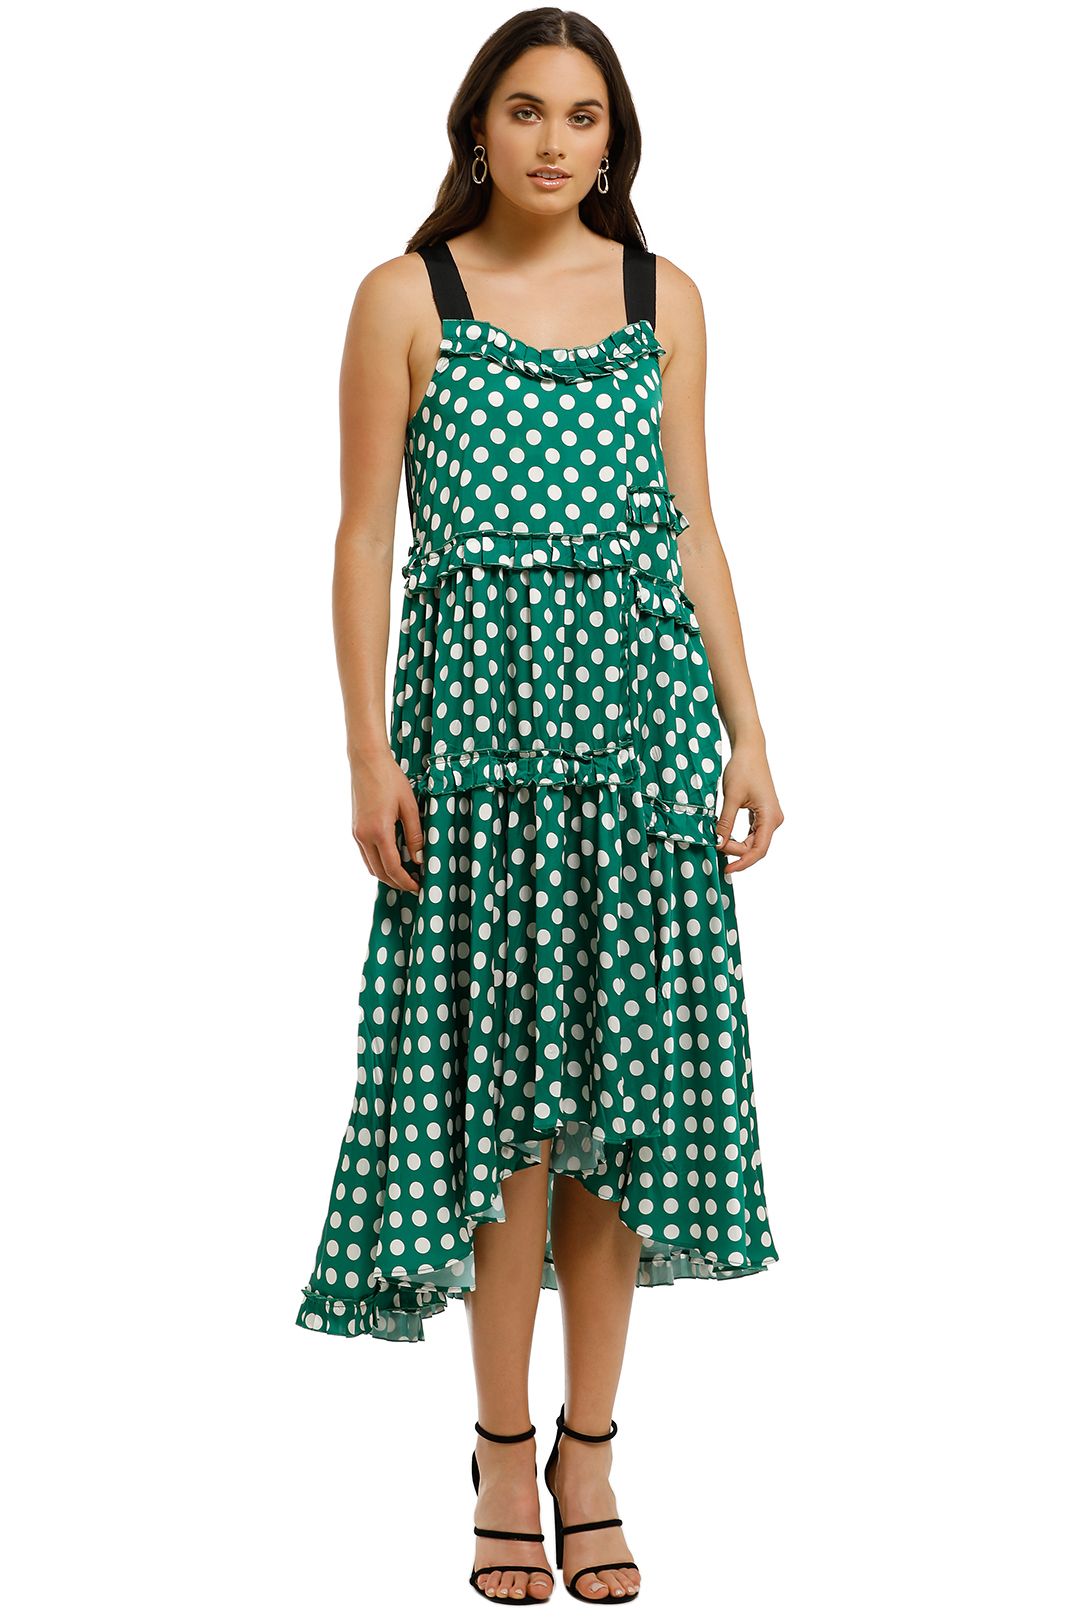 Trelise-Cooper-Pleat-Wave-Dress-Green-Front